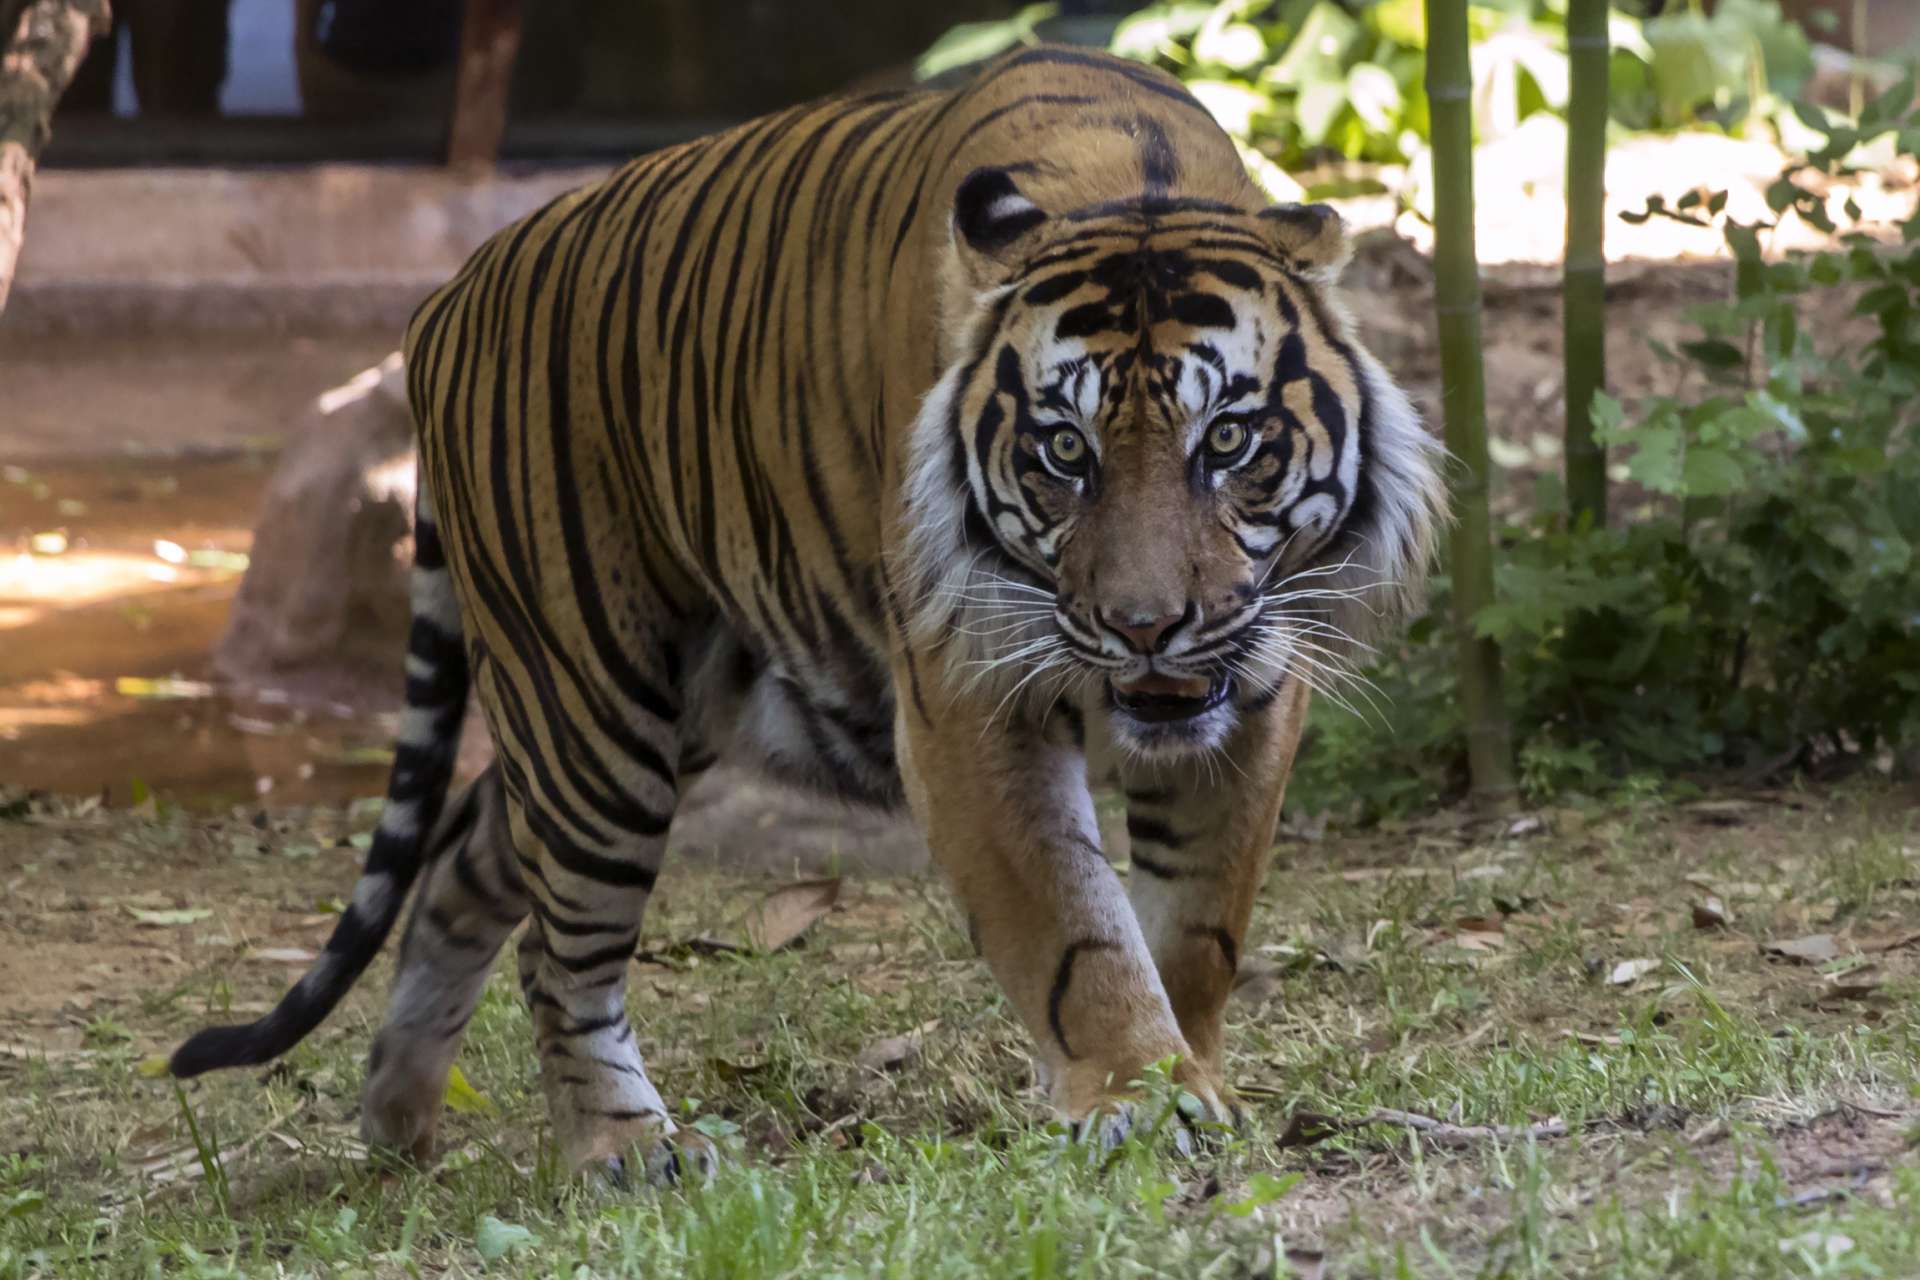 Emerson, critically endangered tiger, has died - Zoo Atlanta